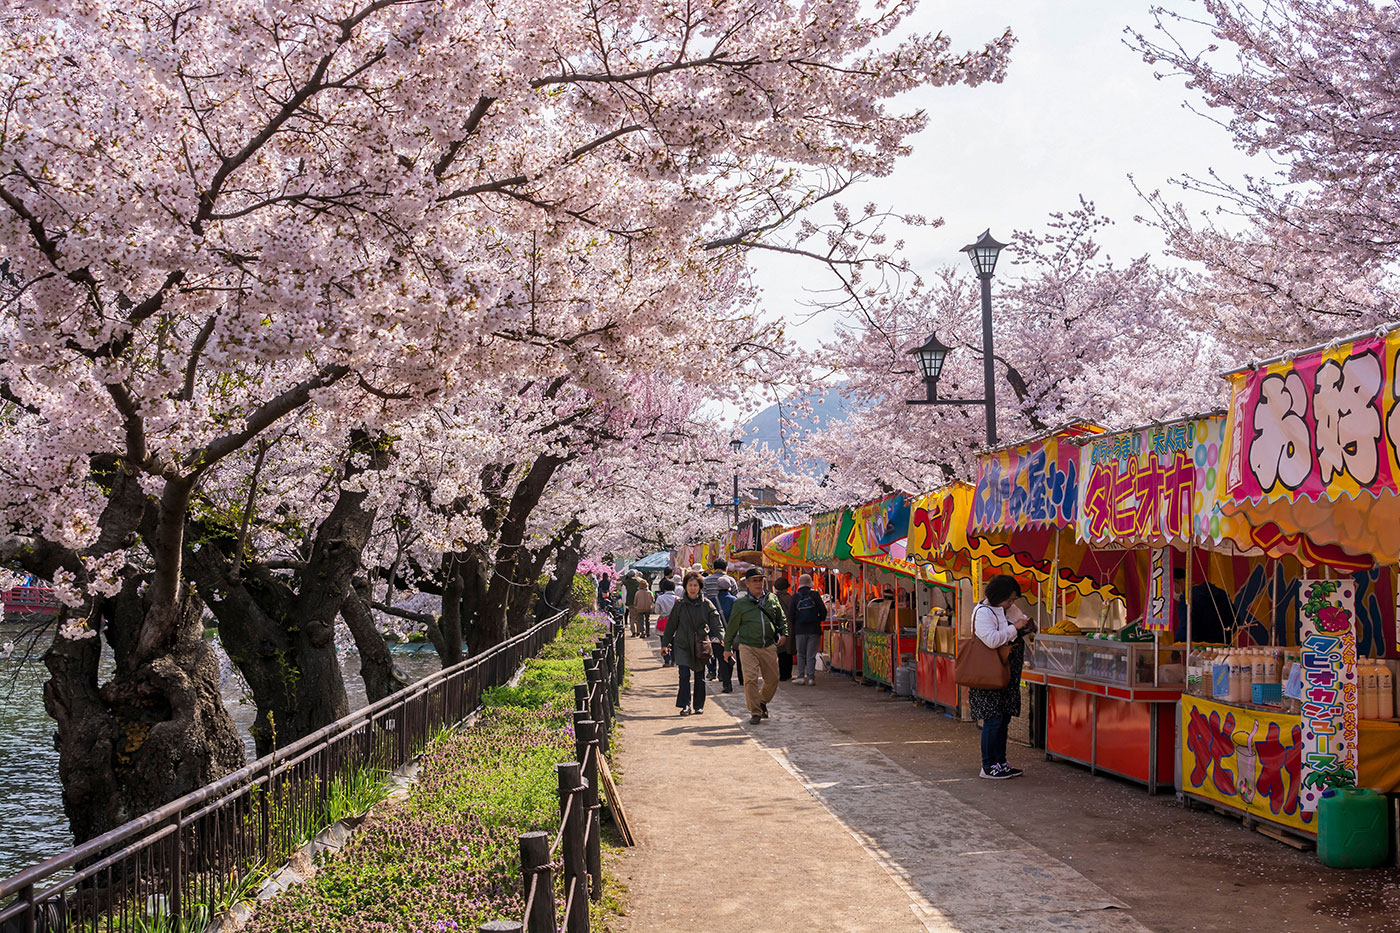 Garyu Park in Nagano, Japan, transforms into a lively hub where visitors savor the beauty of sakura along a charming riverside market